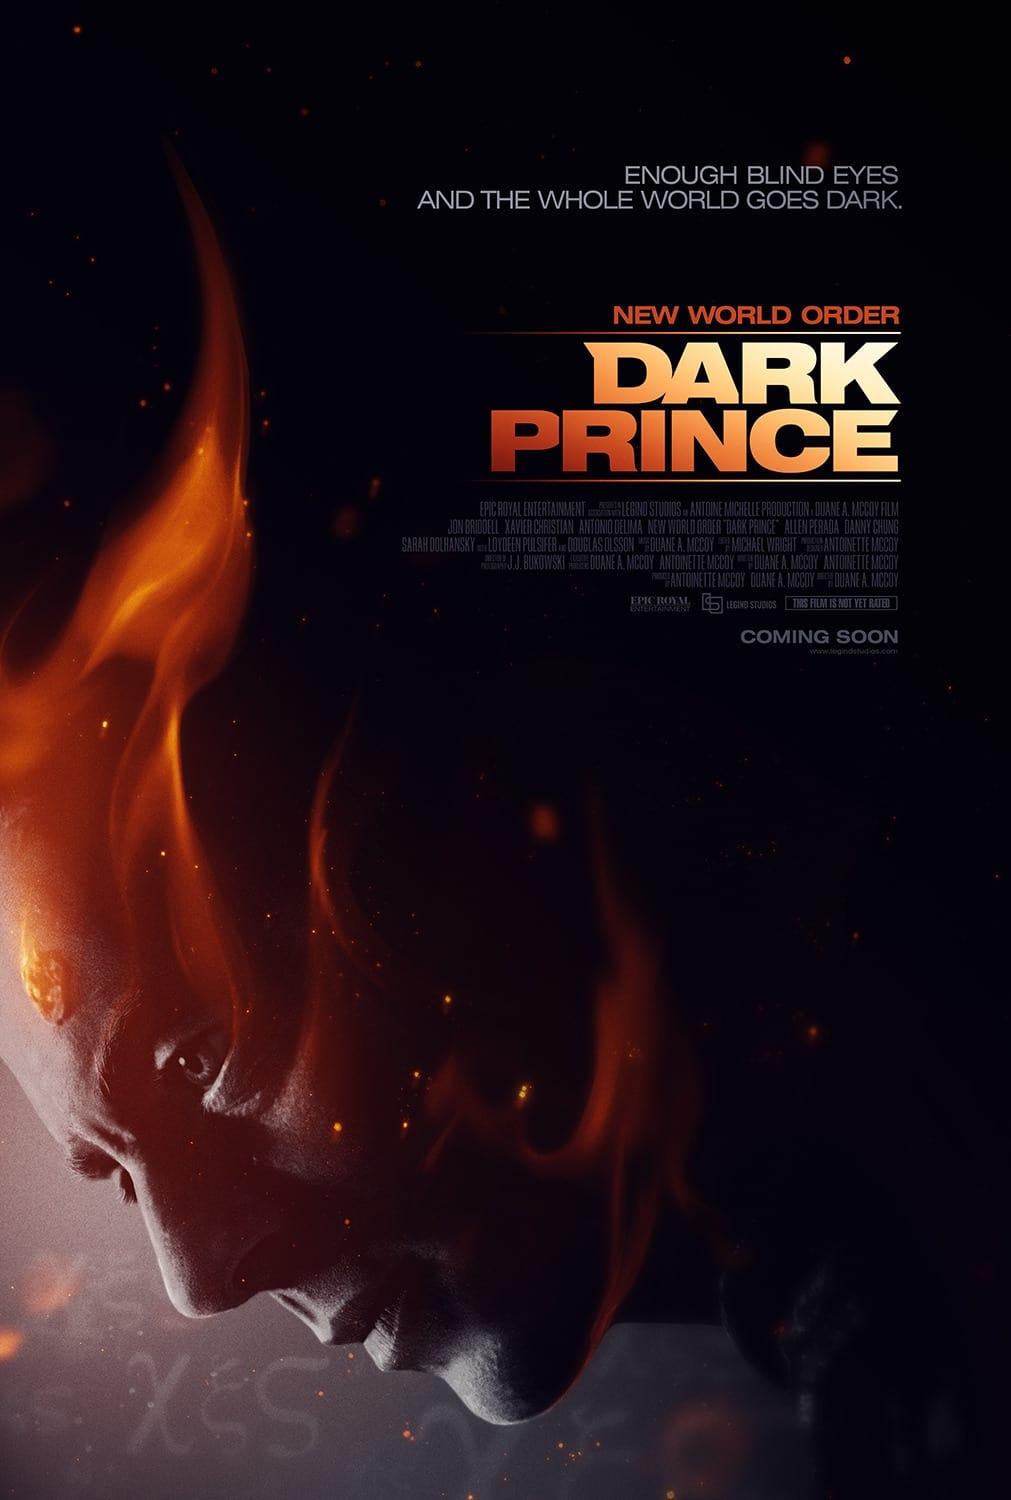 New World Order: Dark Prince poster